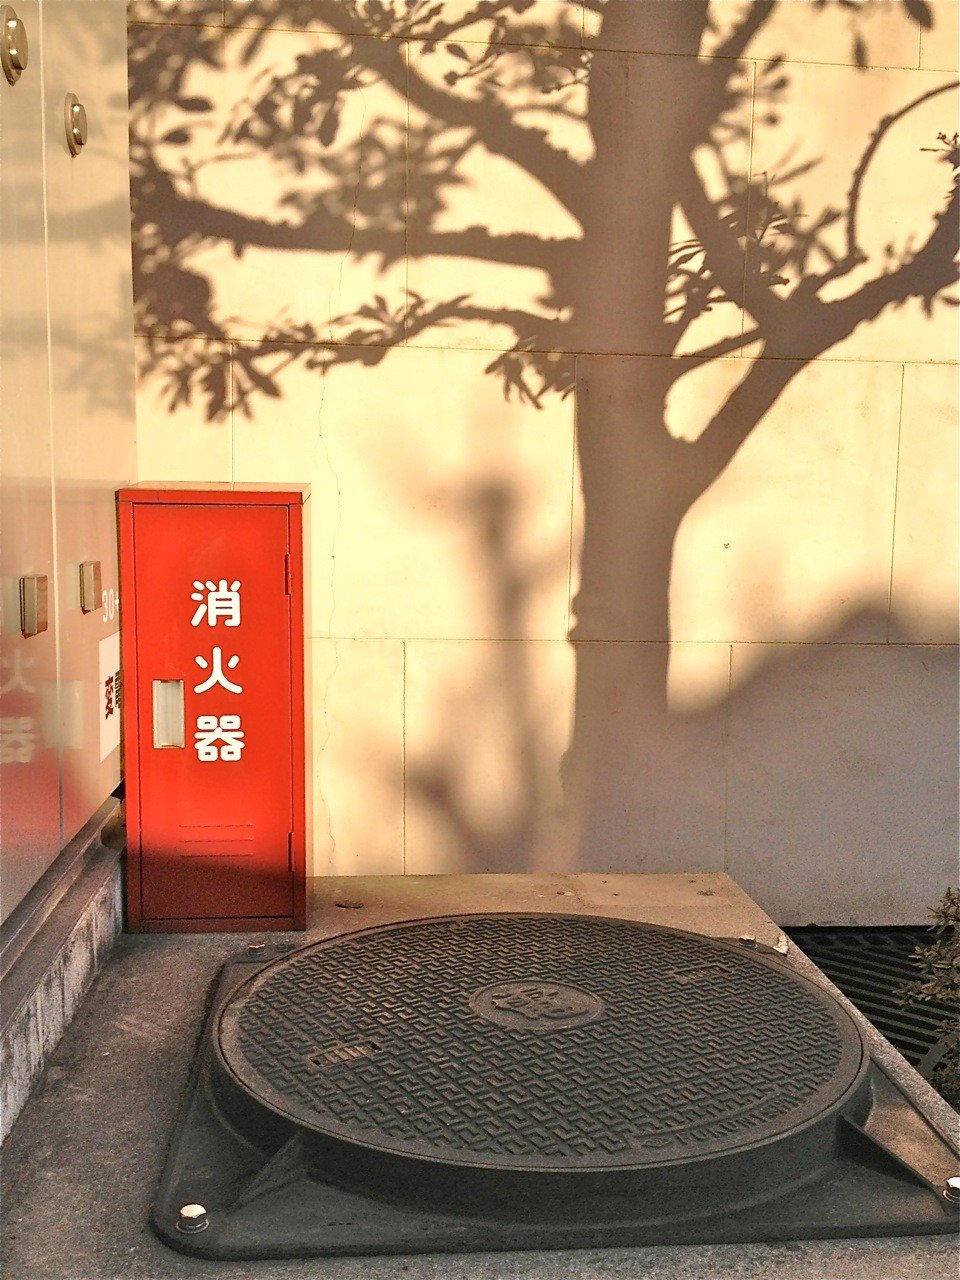 Takamatsu 2-chome, Senkawa, Toshima-ku: Manhole cover, fire hydrant and tree—nature wins the prize for best design